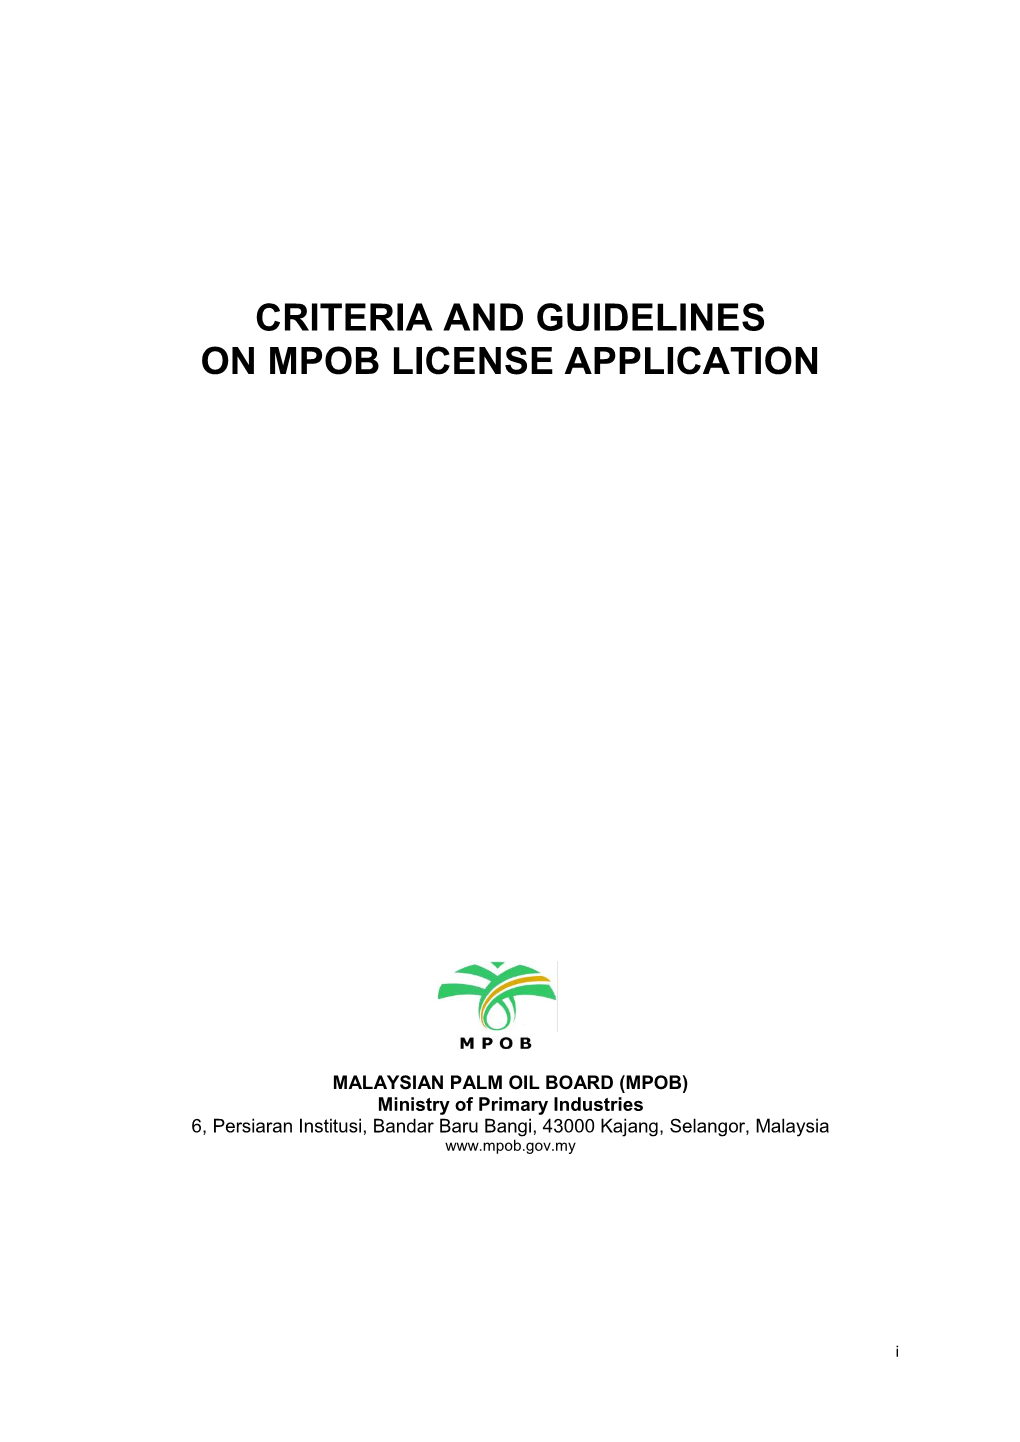 Criteria and Guidelines on Mpob License Application